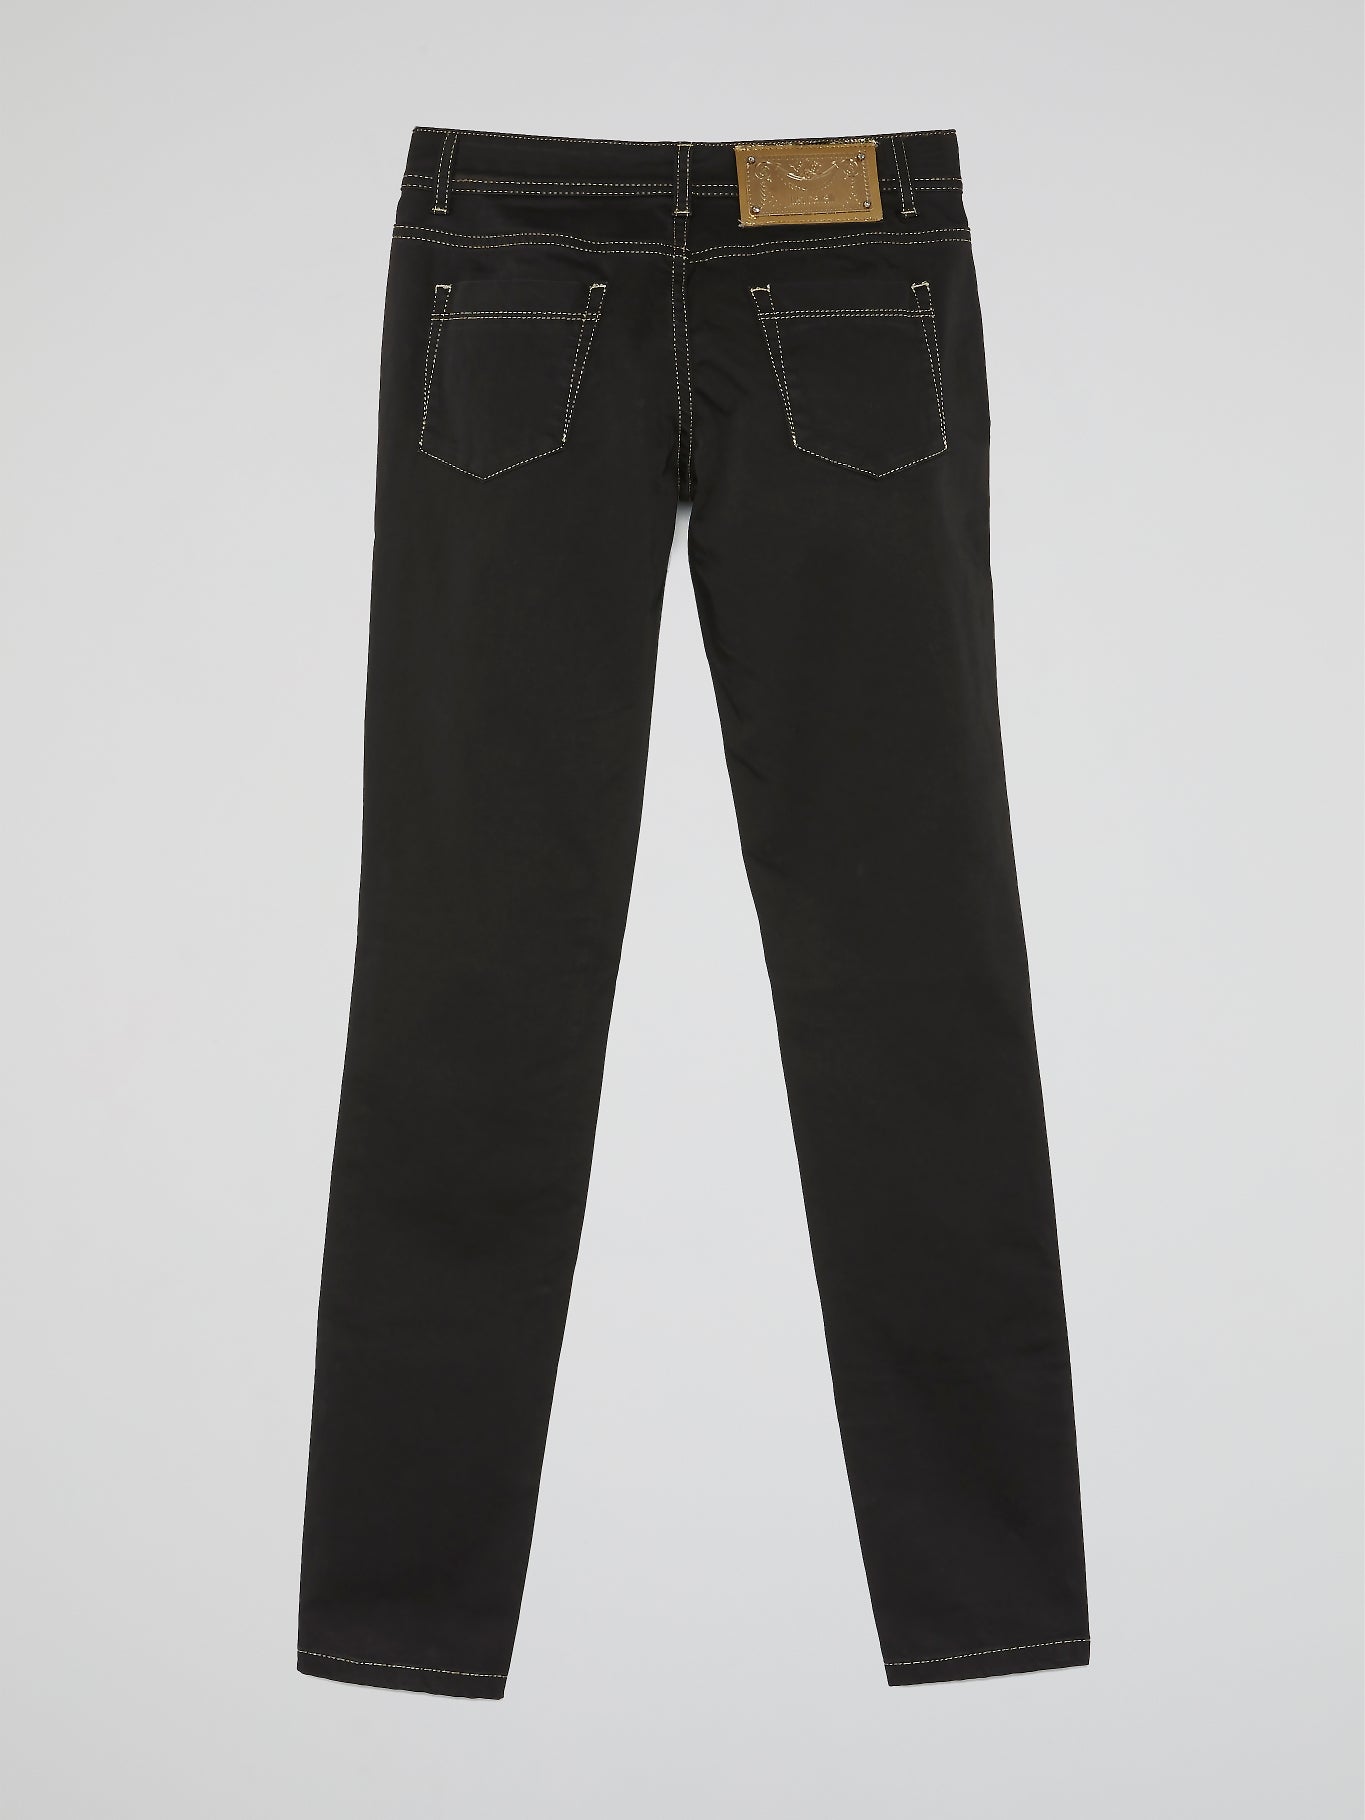 Black Contrast Stitch Jeans